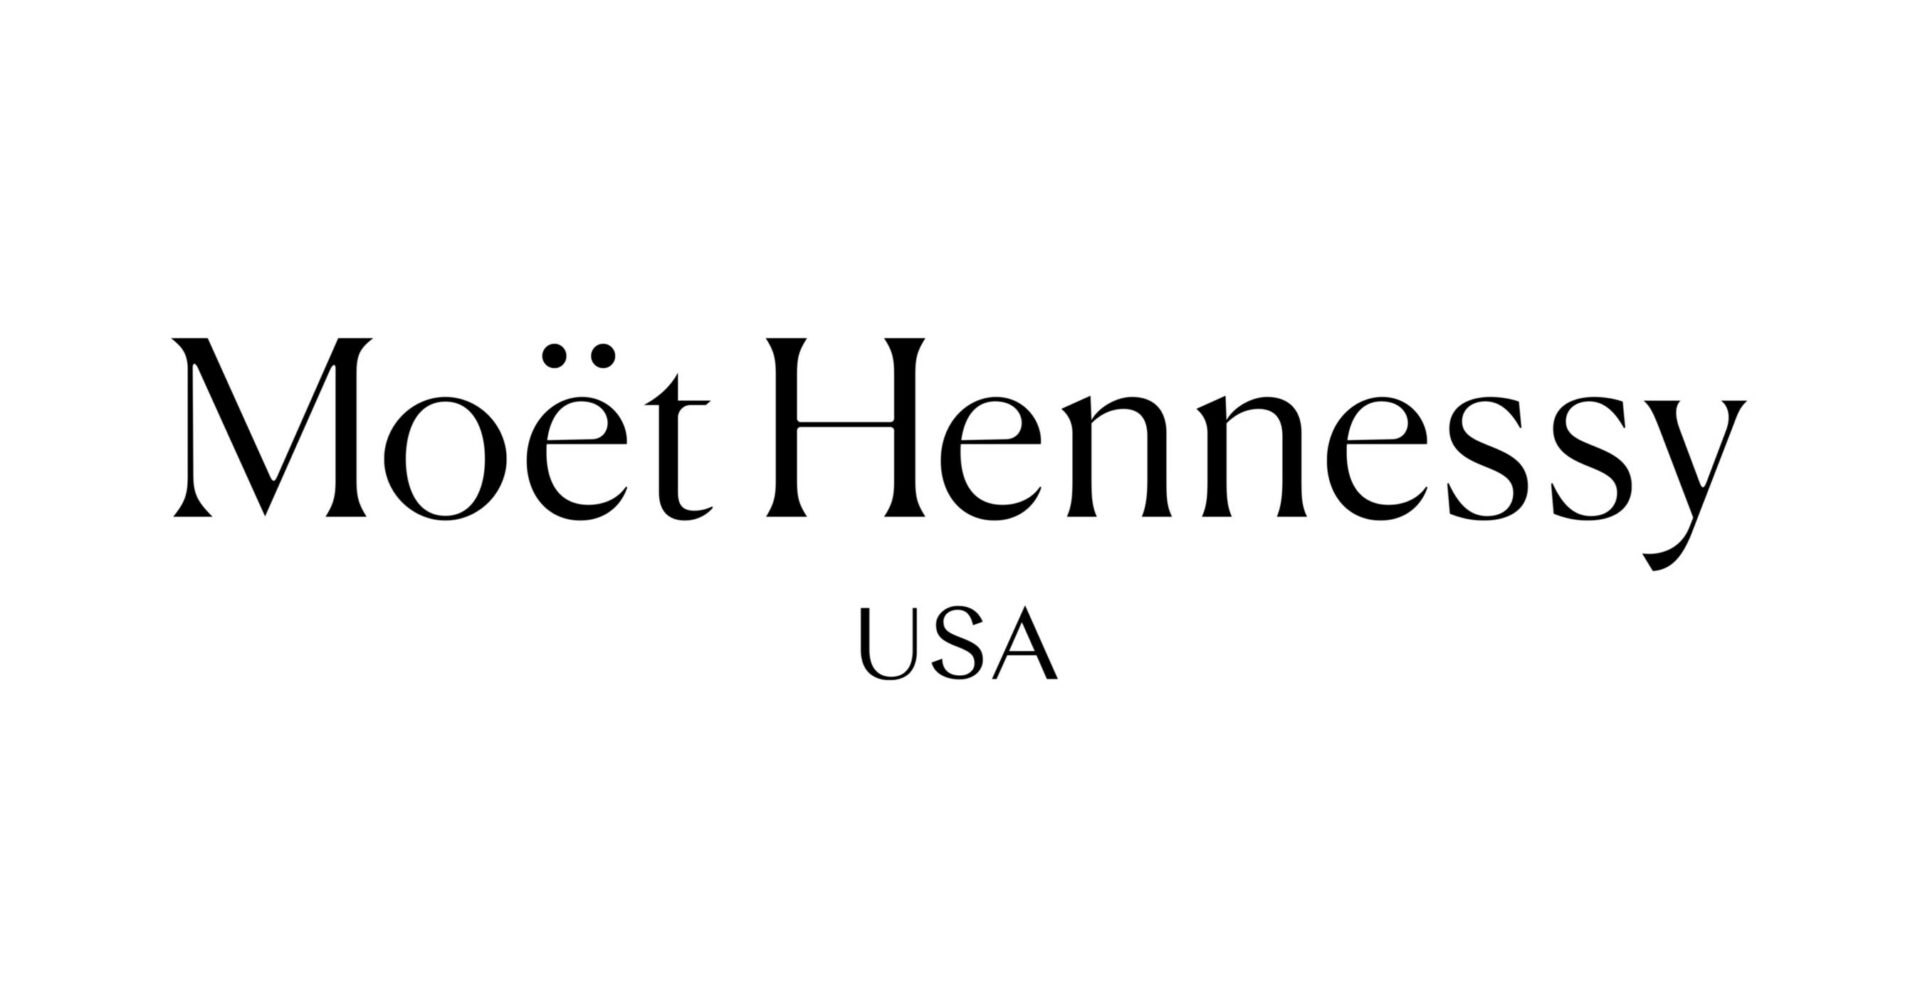 Moet Hennessy USA